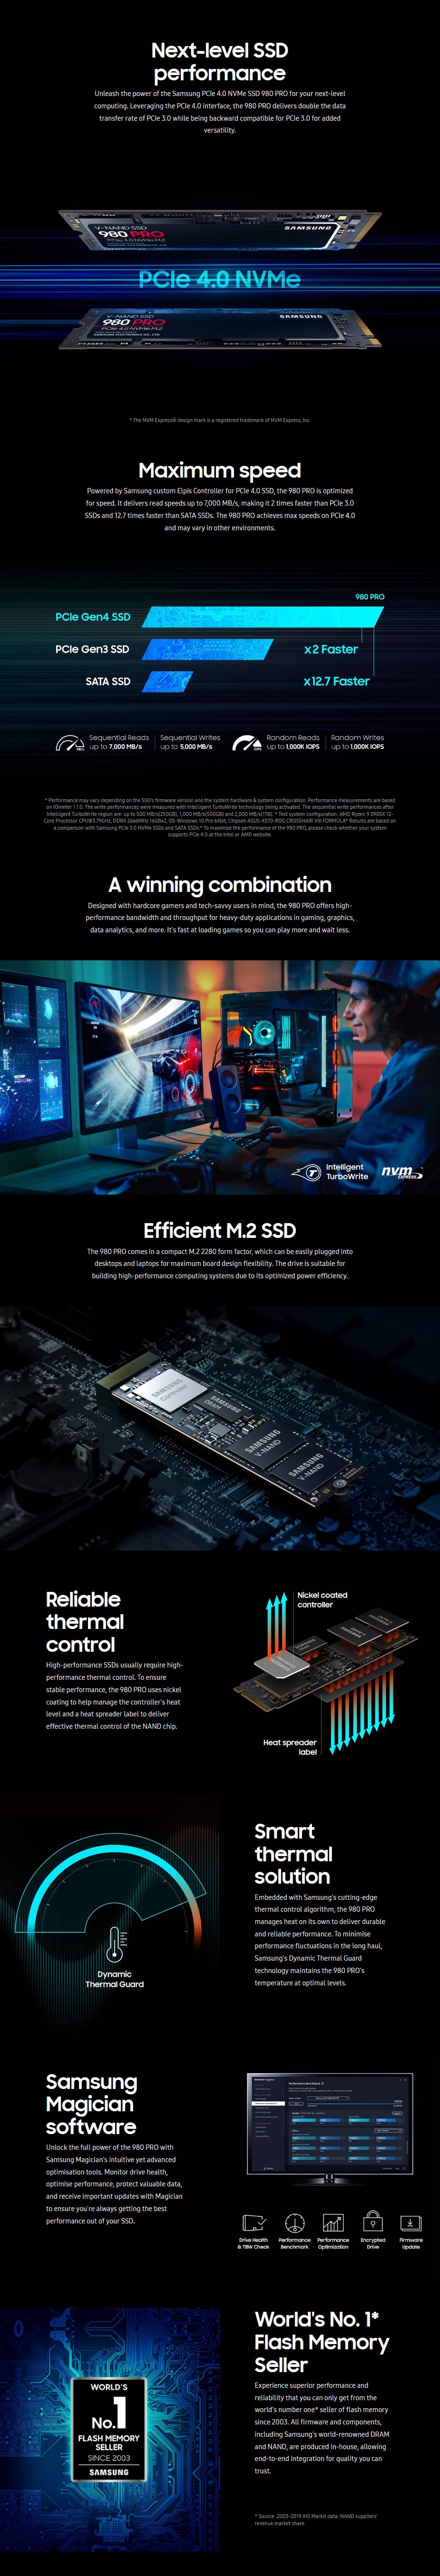 Samsung 980 Pro 500GB NVMe 1.3c M.2 (2280) V-NAND 3-Bit MLC SSD - MZ-V8P500BW - Overview 1